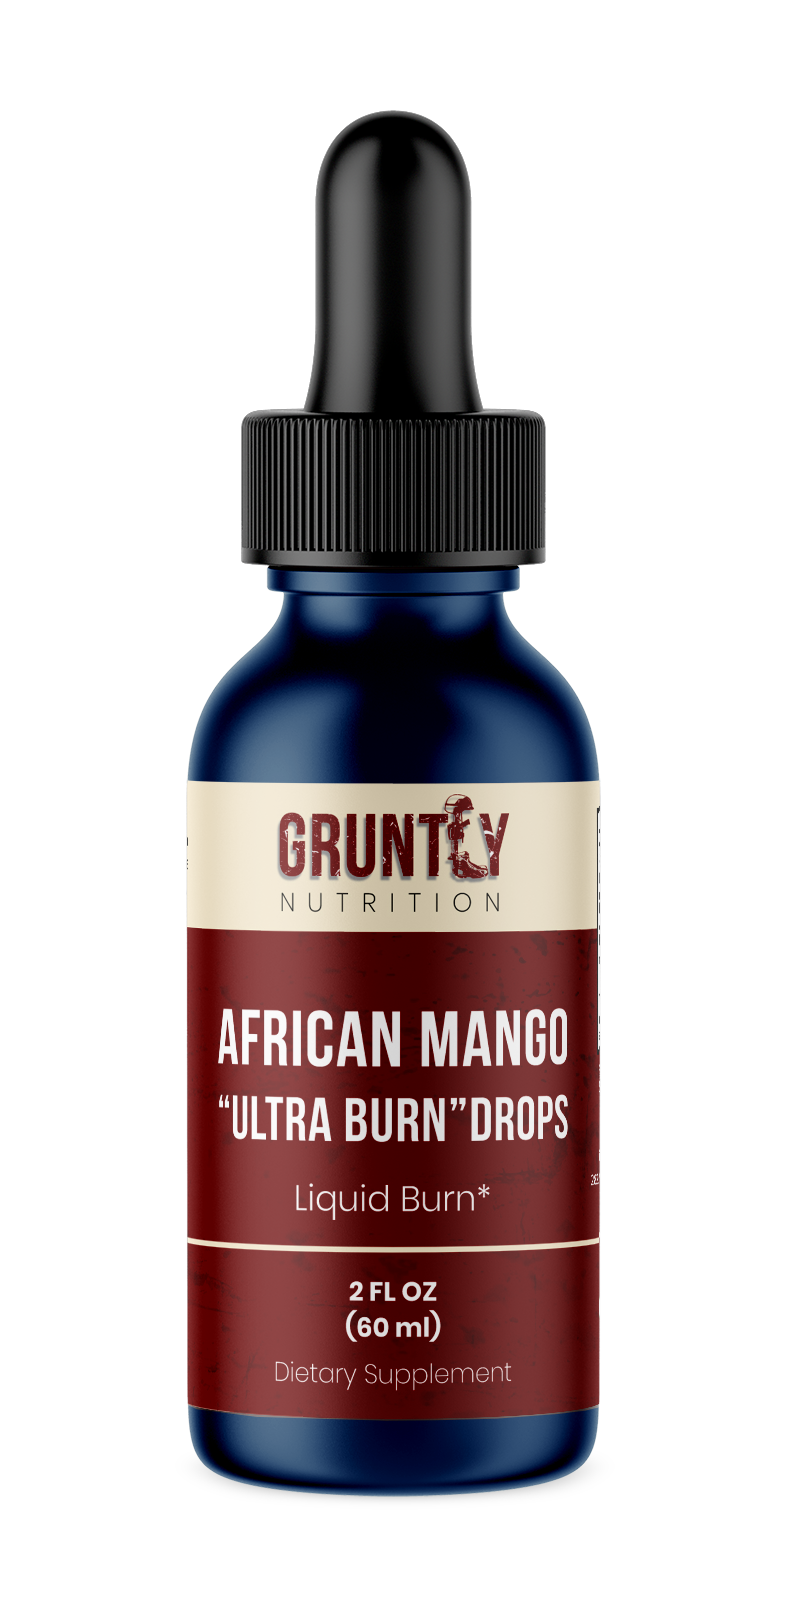 African Mango Ultra Burn Drops